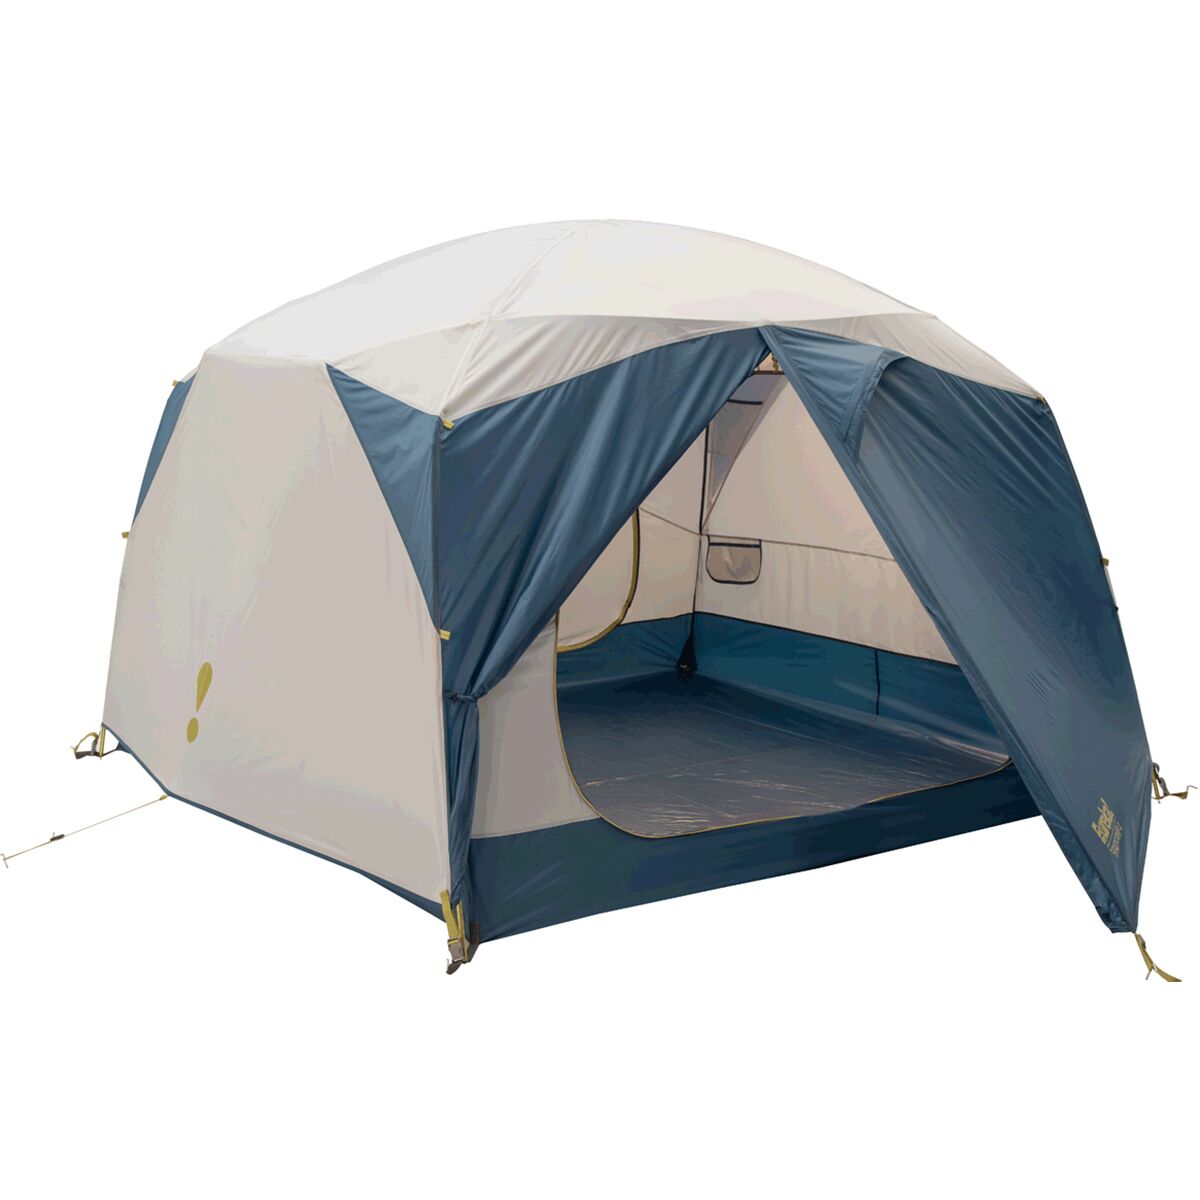 Eureka Space Camp Tent: 4-Person 3-Season